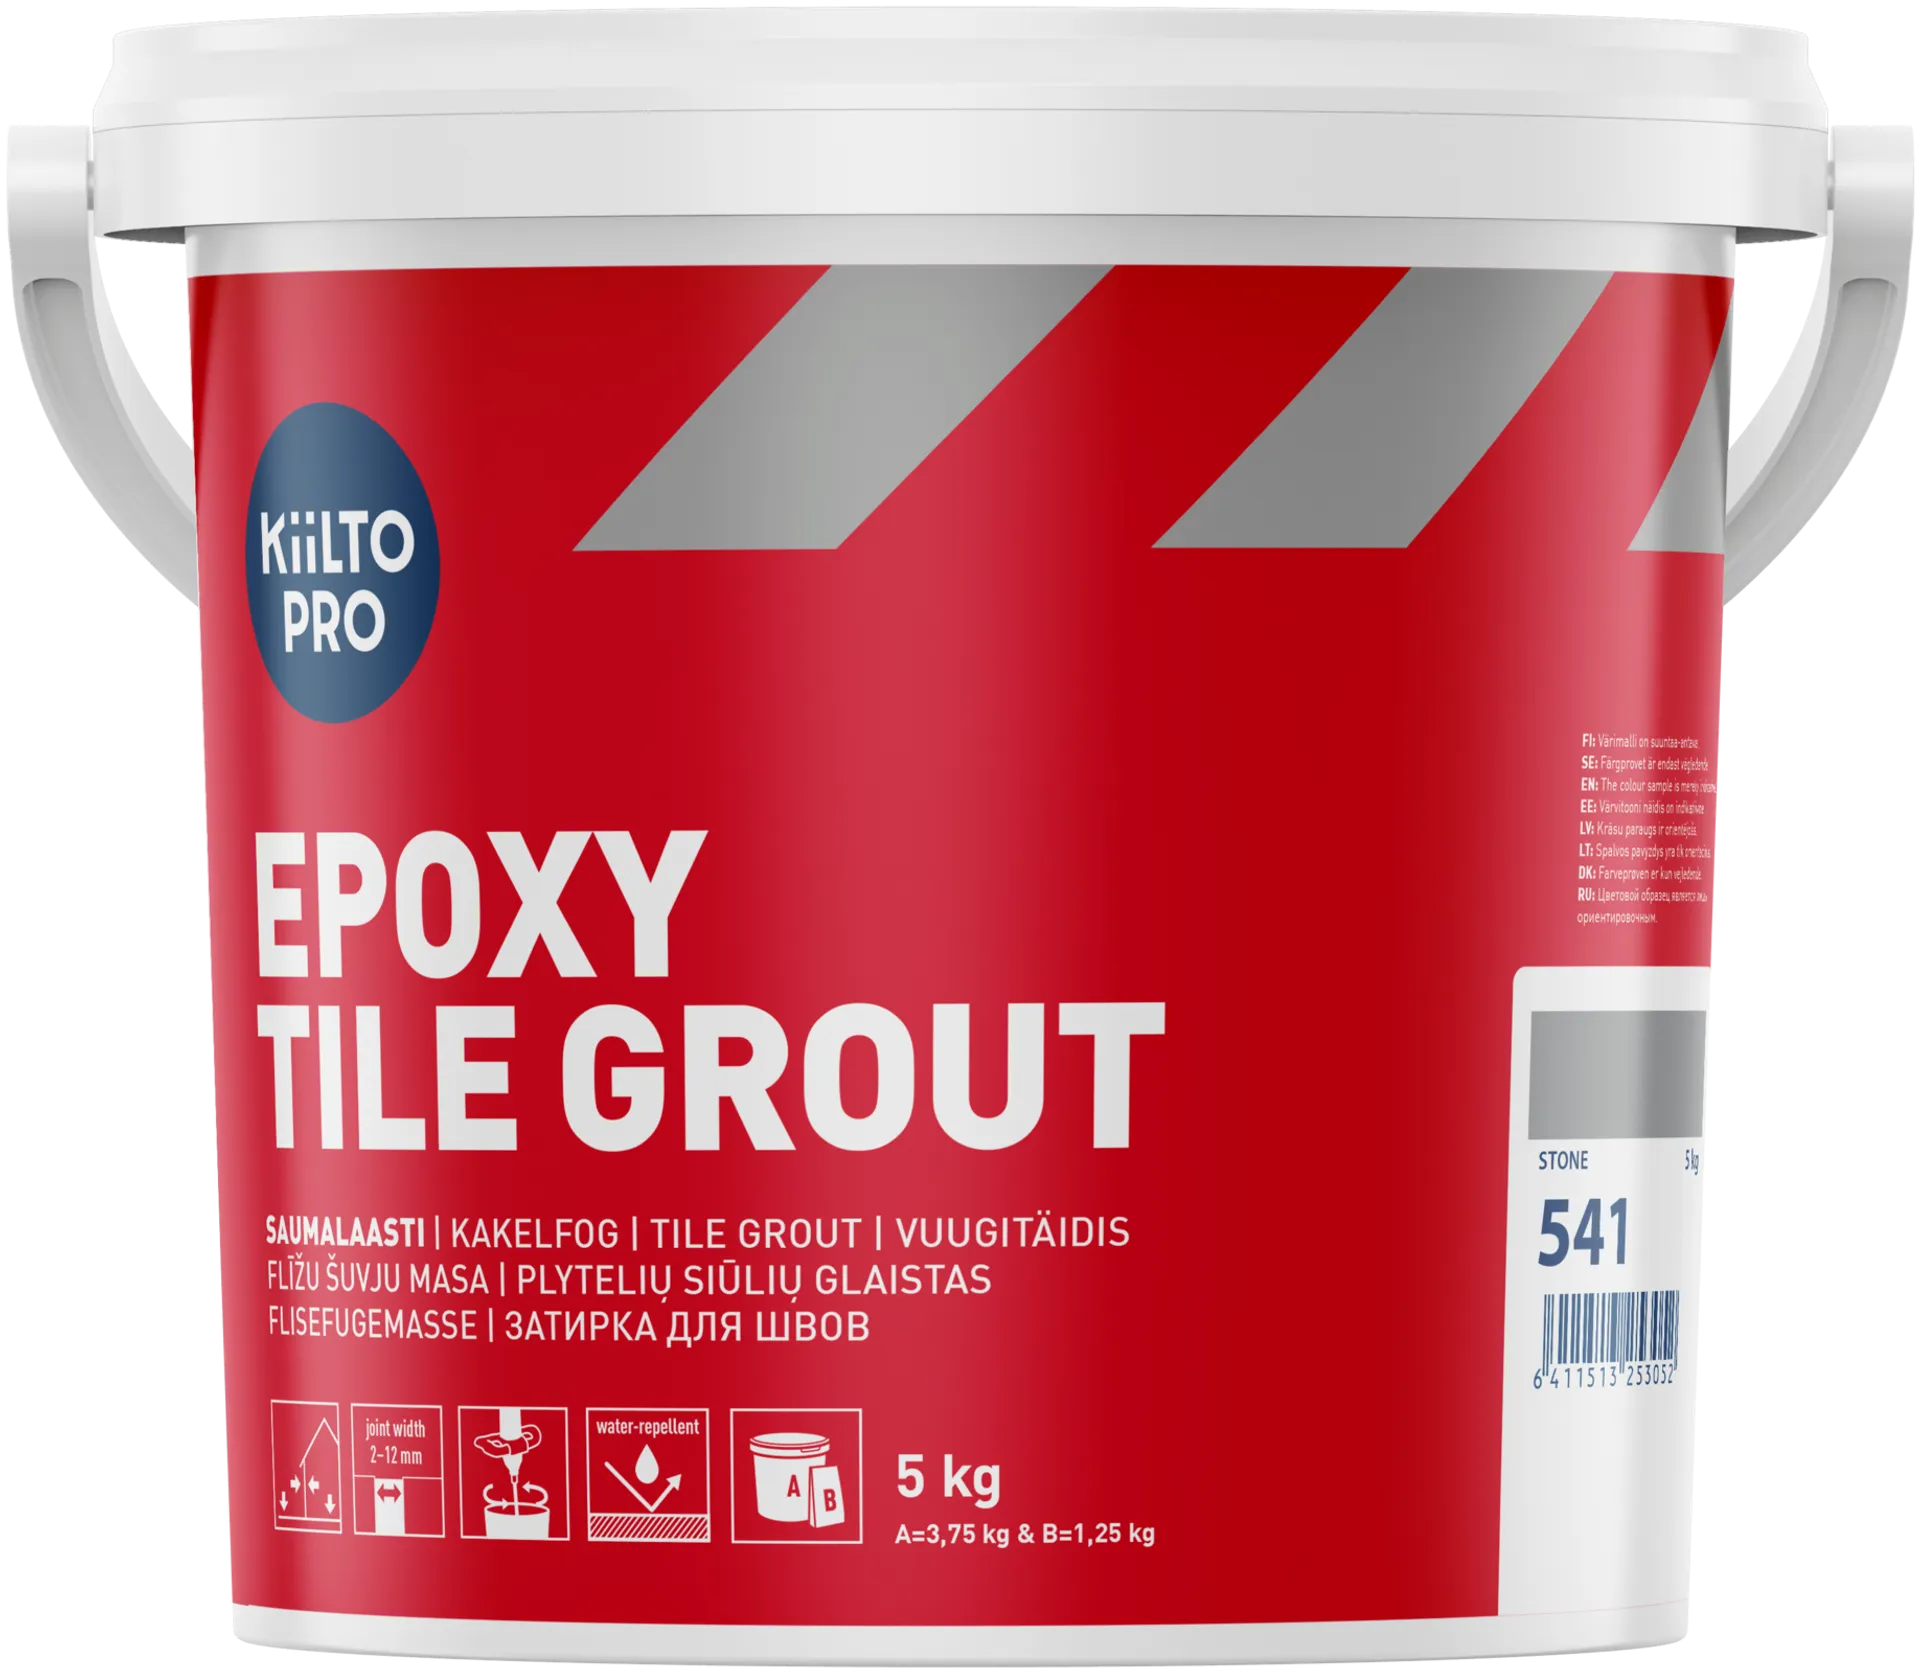 Kiilto Pro Epoxy Tile grout saumalaasti 541 stone 5 kg